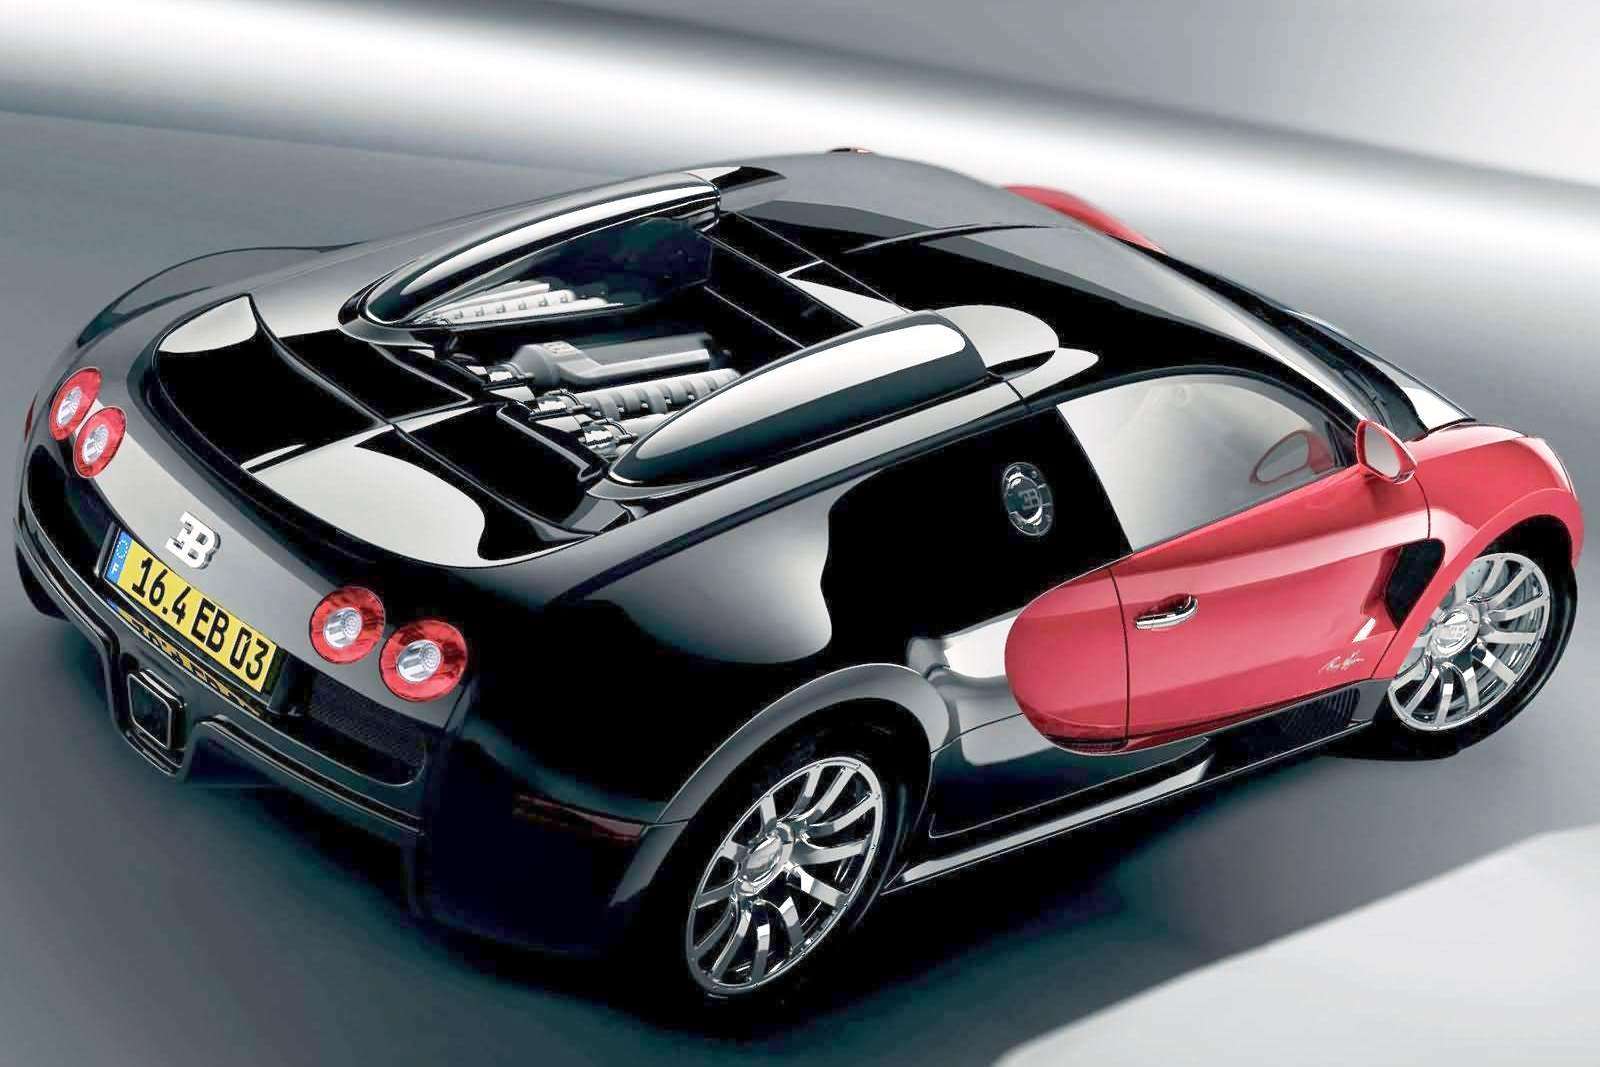 Bugatti Eb Veyron Wallpaper Car Pictures Image